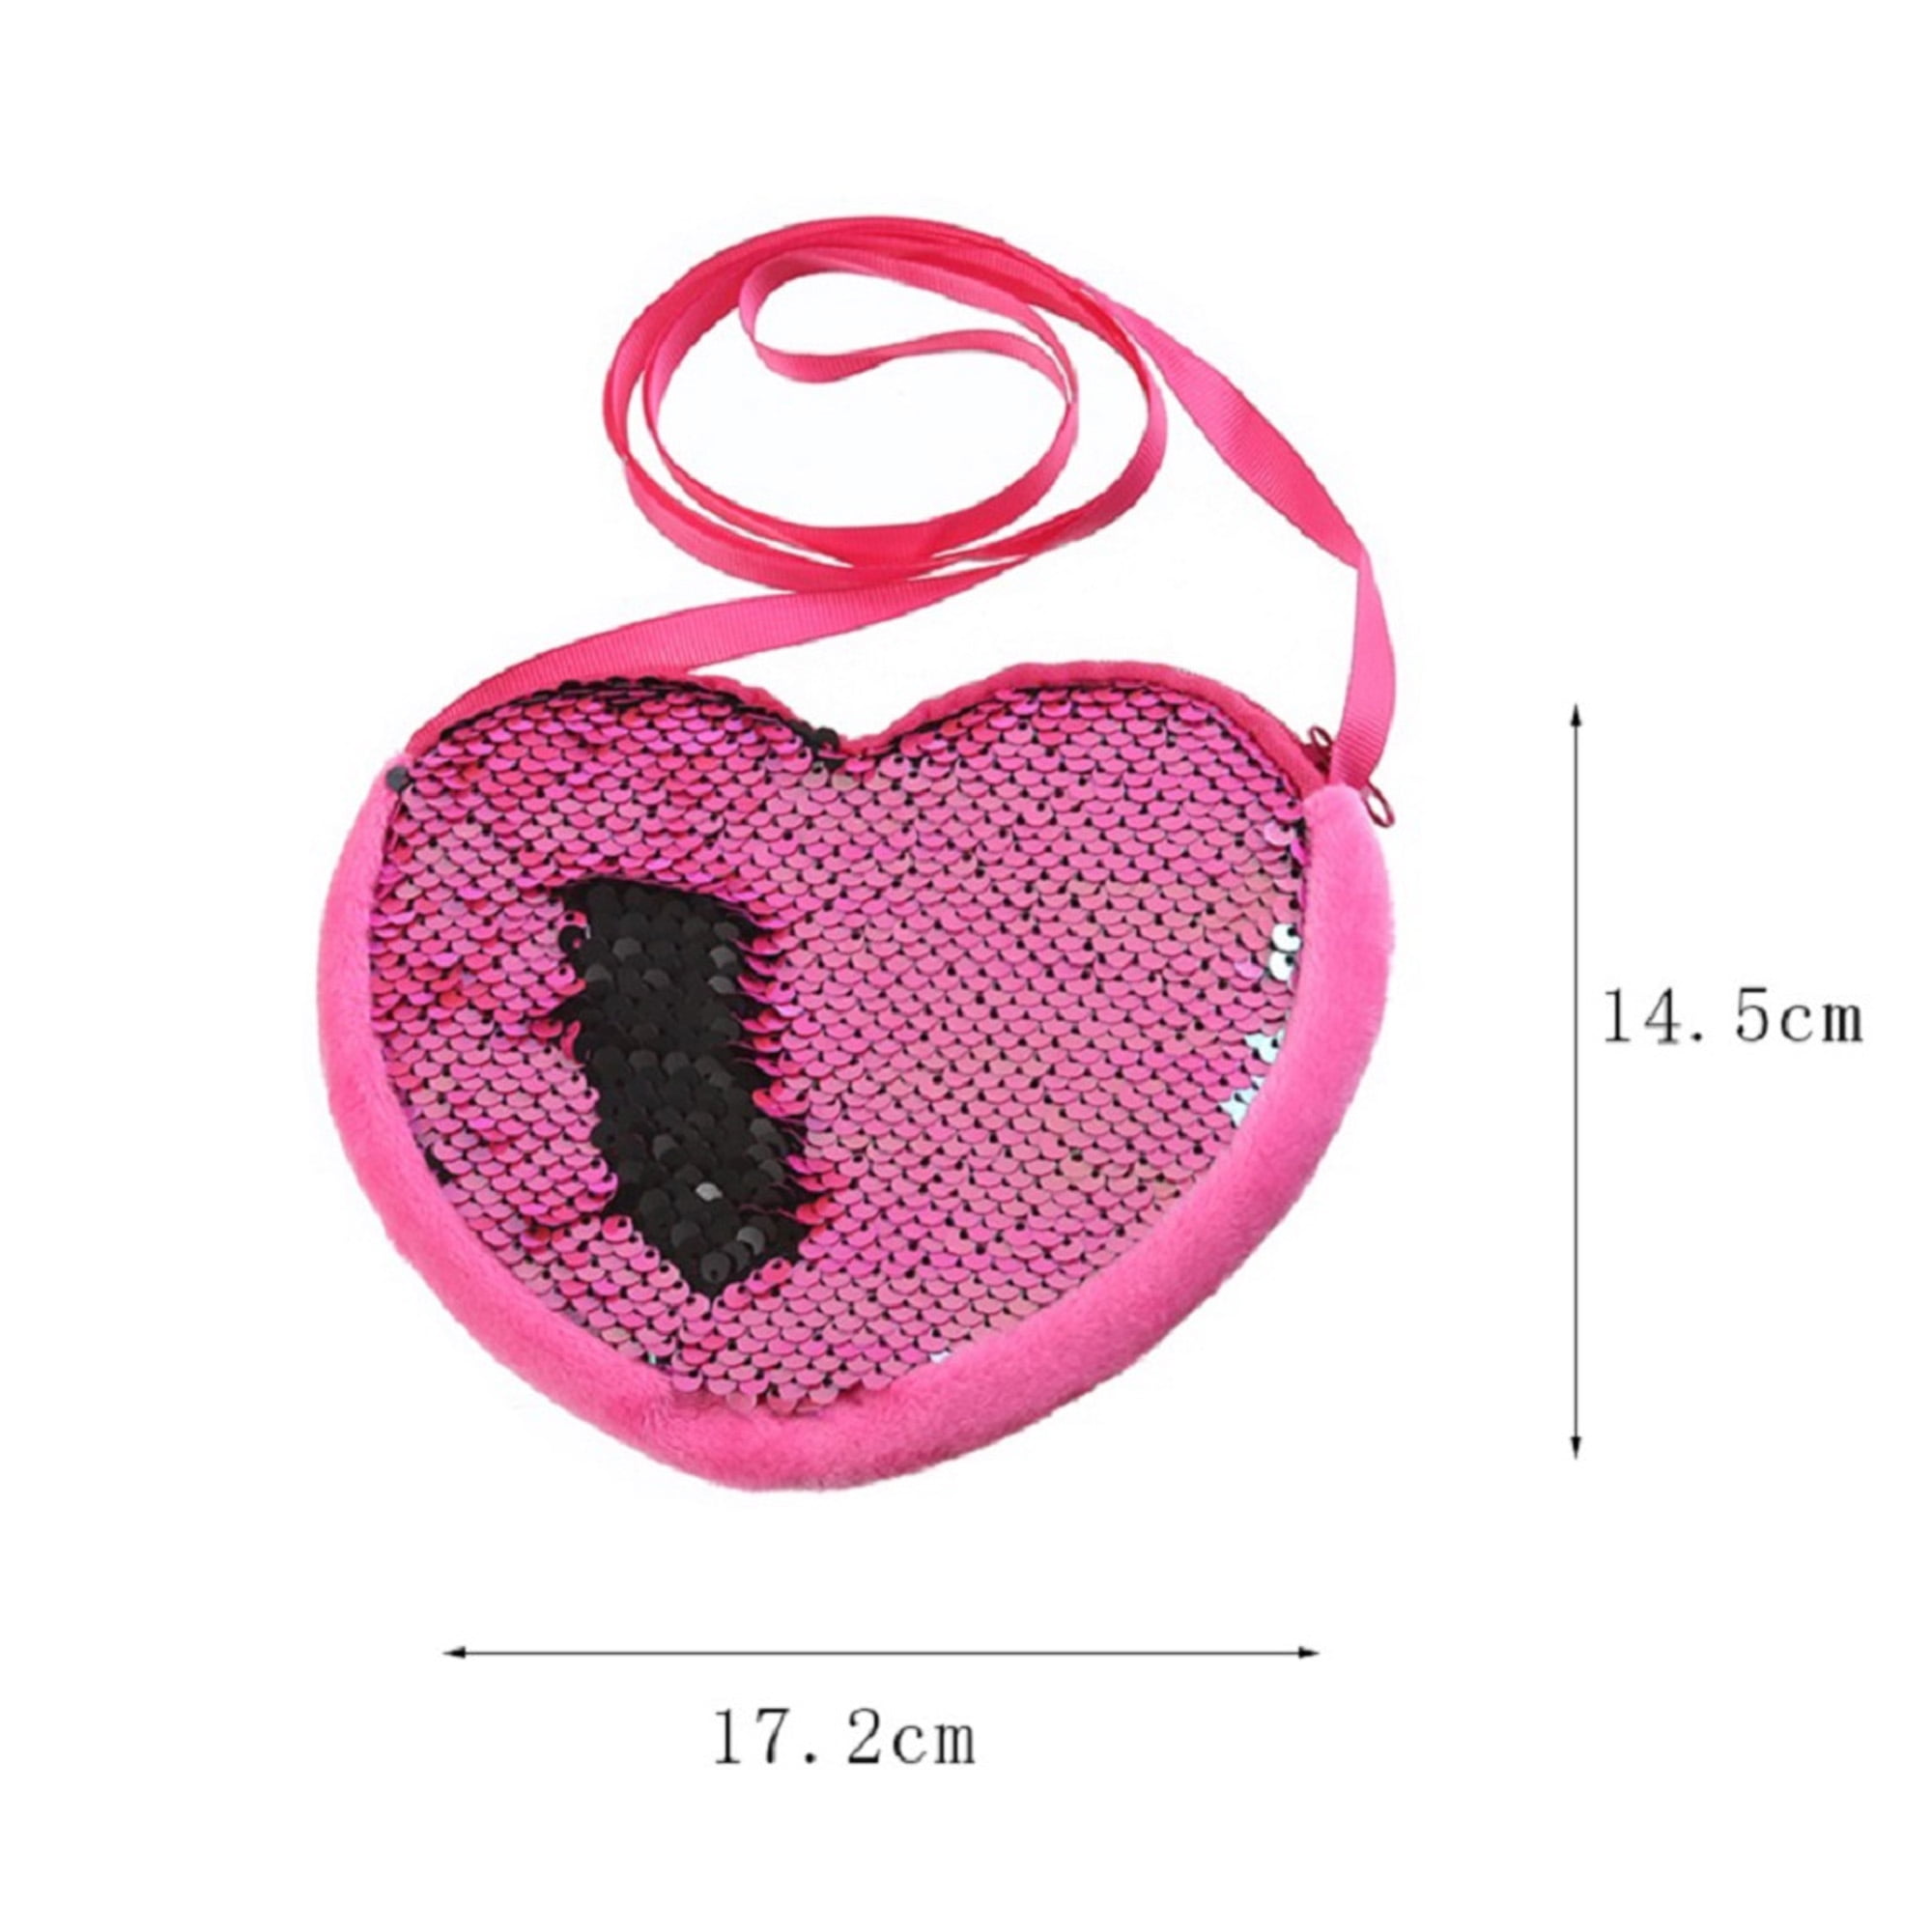 MC-1024 Milan Chiva® Heart Shaped Mini Clutch/Crossbody Bag - Pink